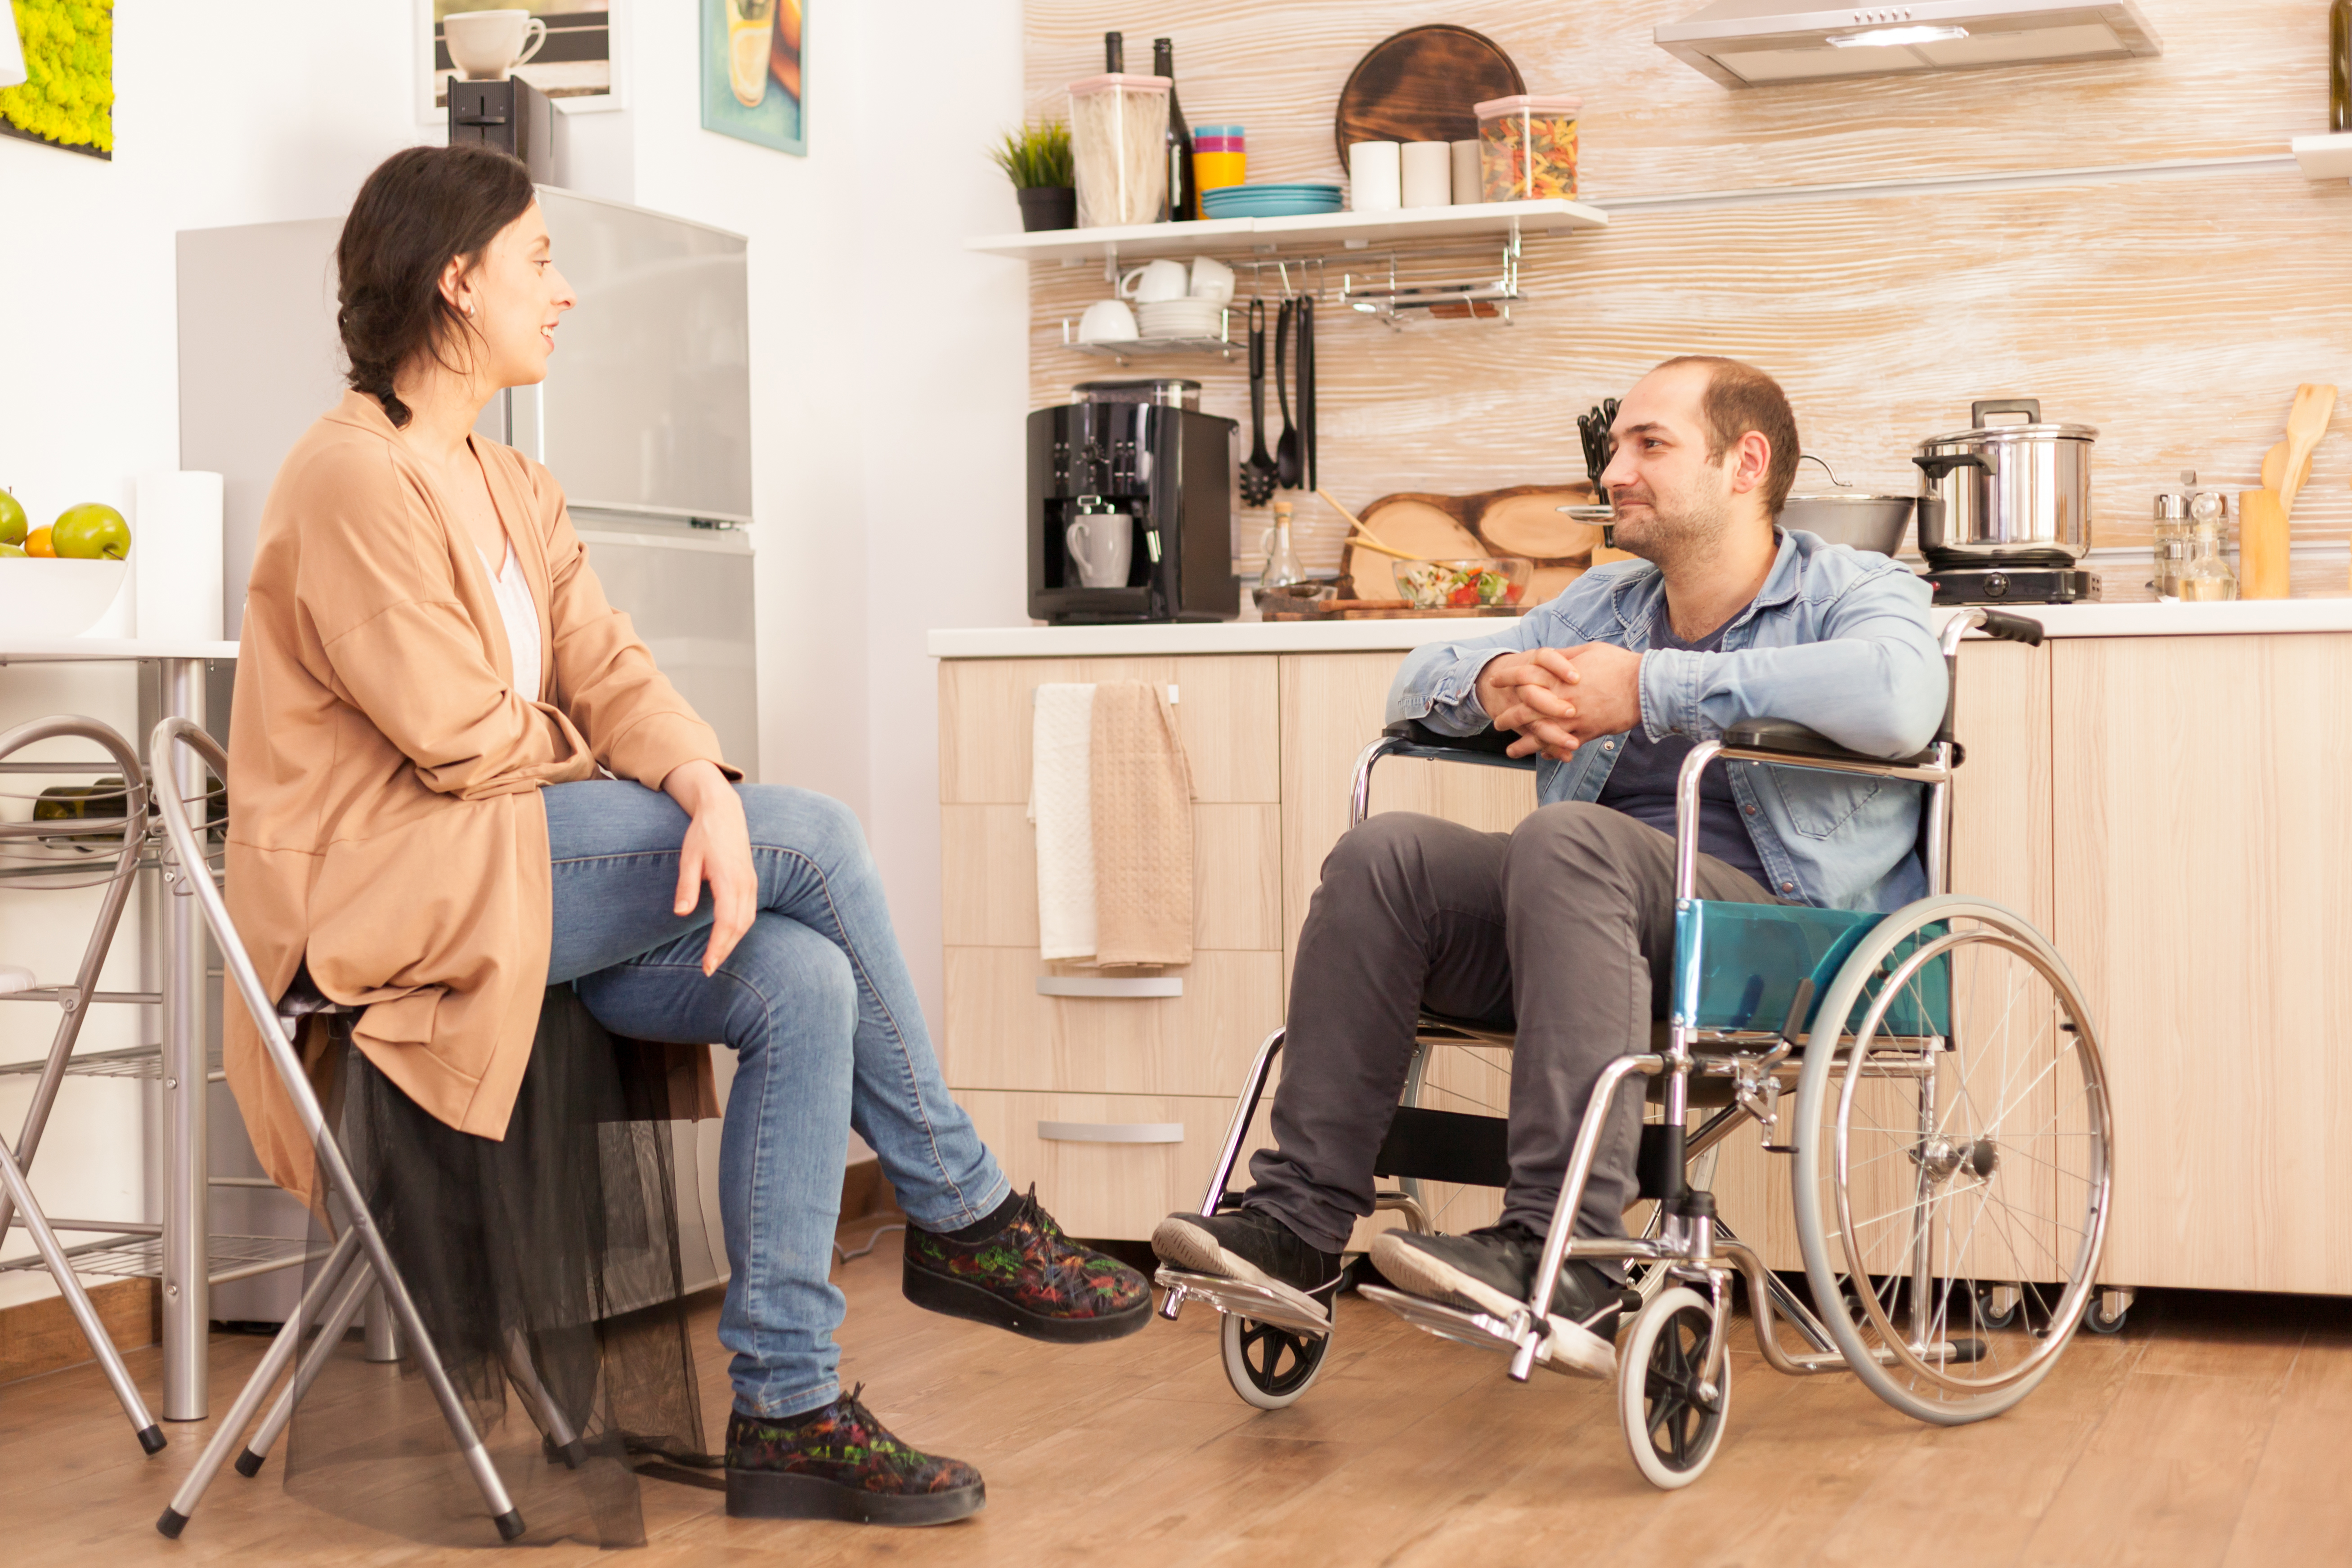 Муж инвалид. Кухня для инвалидов. Кухня для инвалида с креслом. Муж инвалид и его жена. Уход за супругом инвалидом